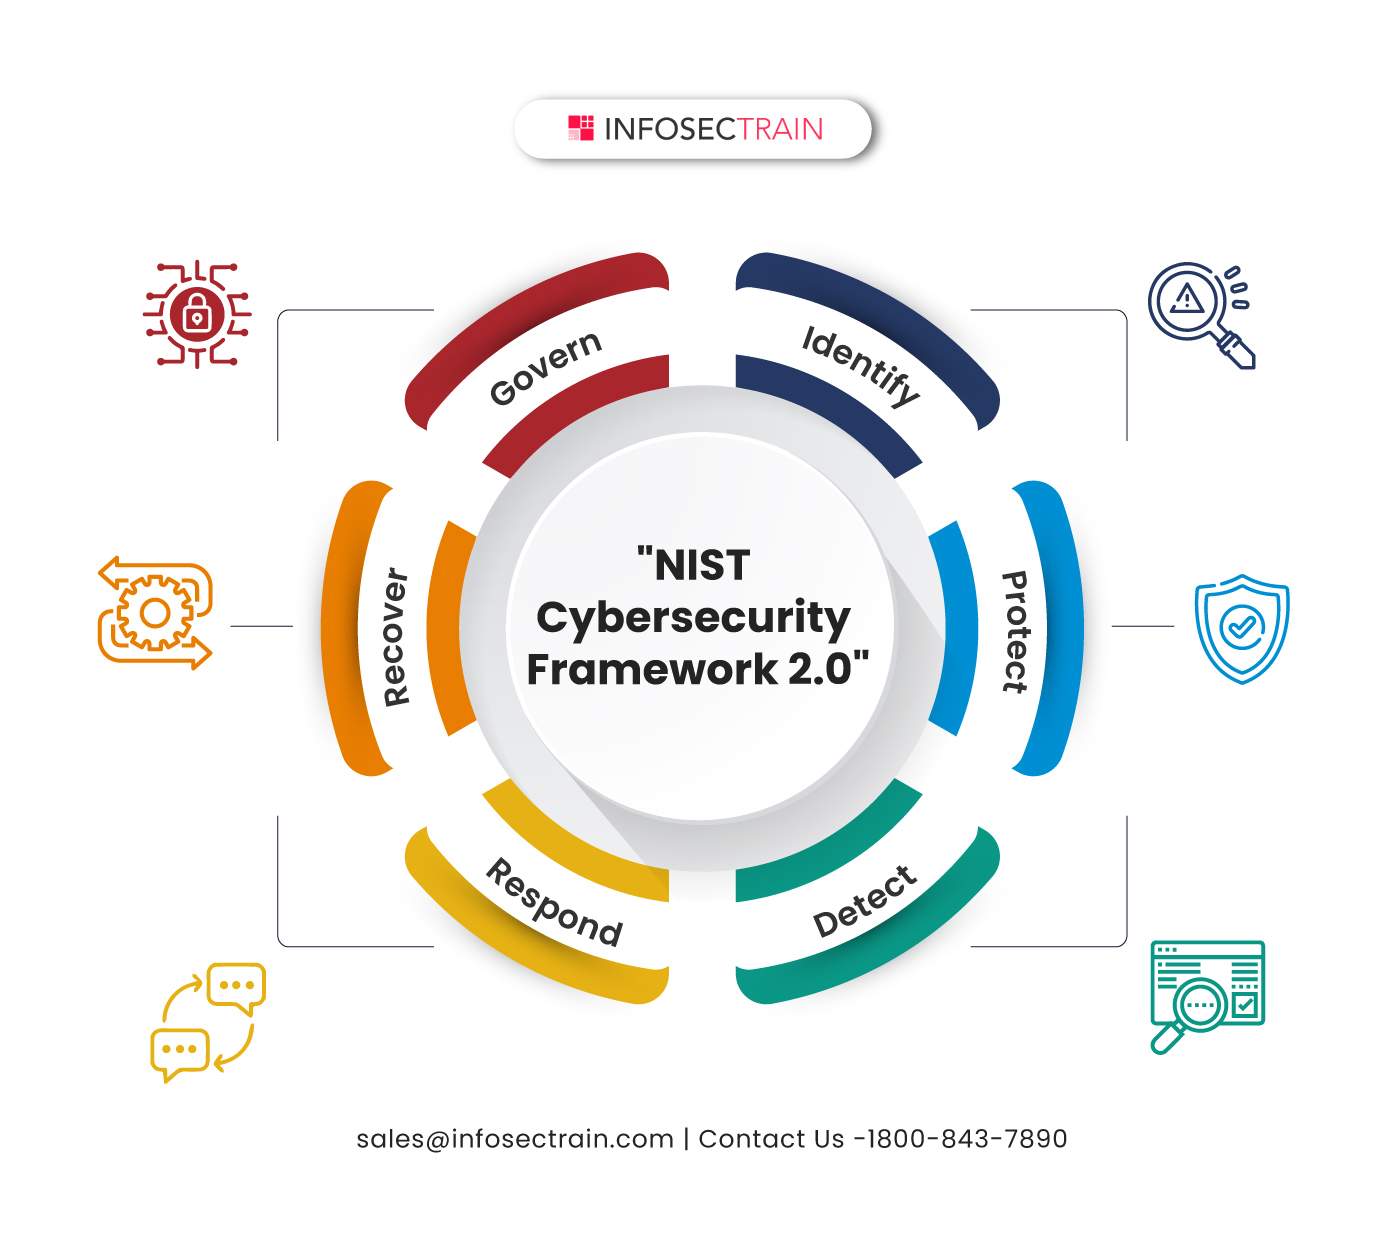 NIST Cybersecurity Framework 2.0 - InfosecTrain